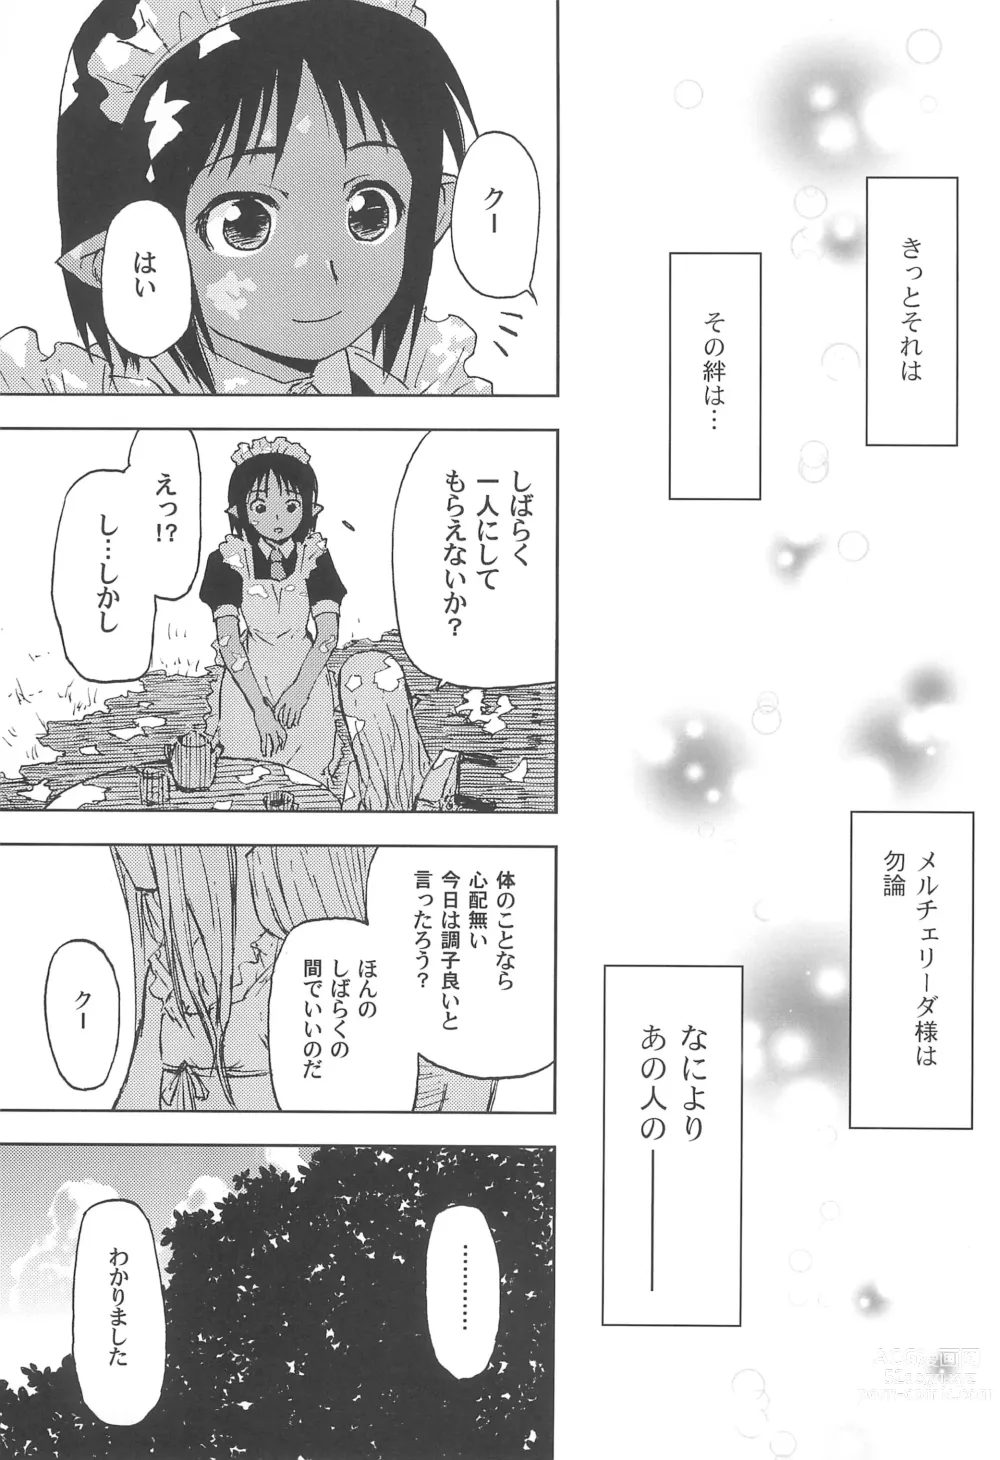 Page 67 of doujinshi Maigo no Maigo no Hime-sama Plus